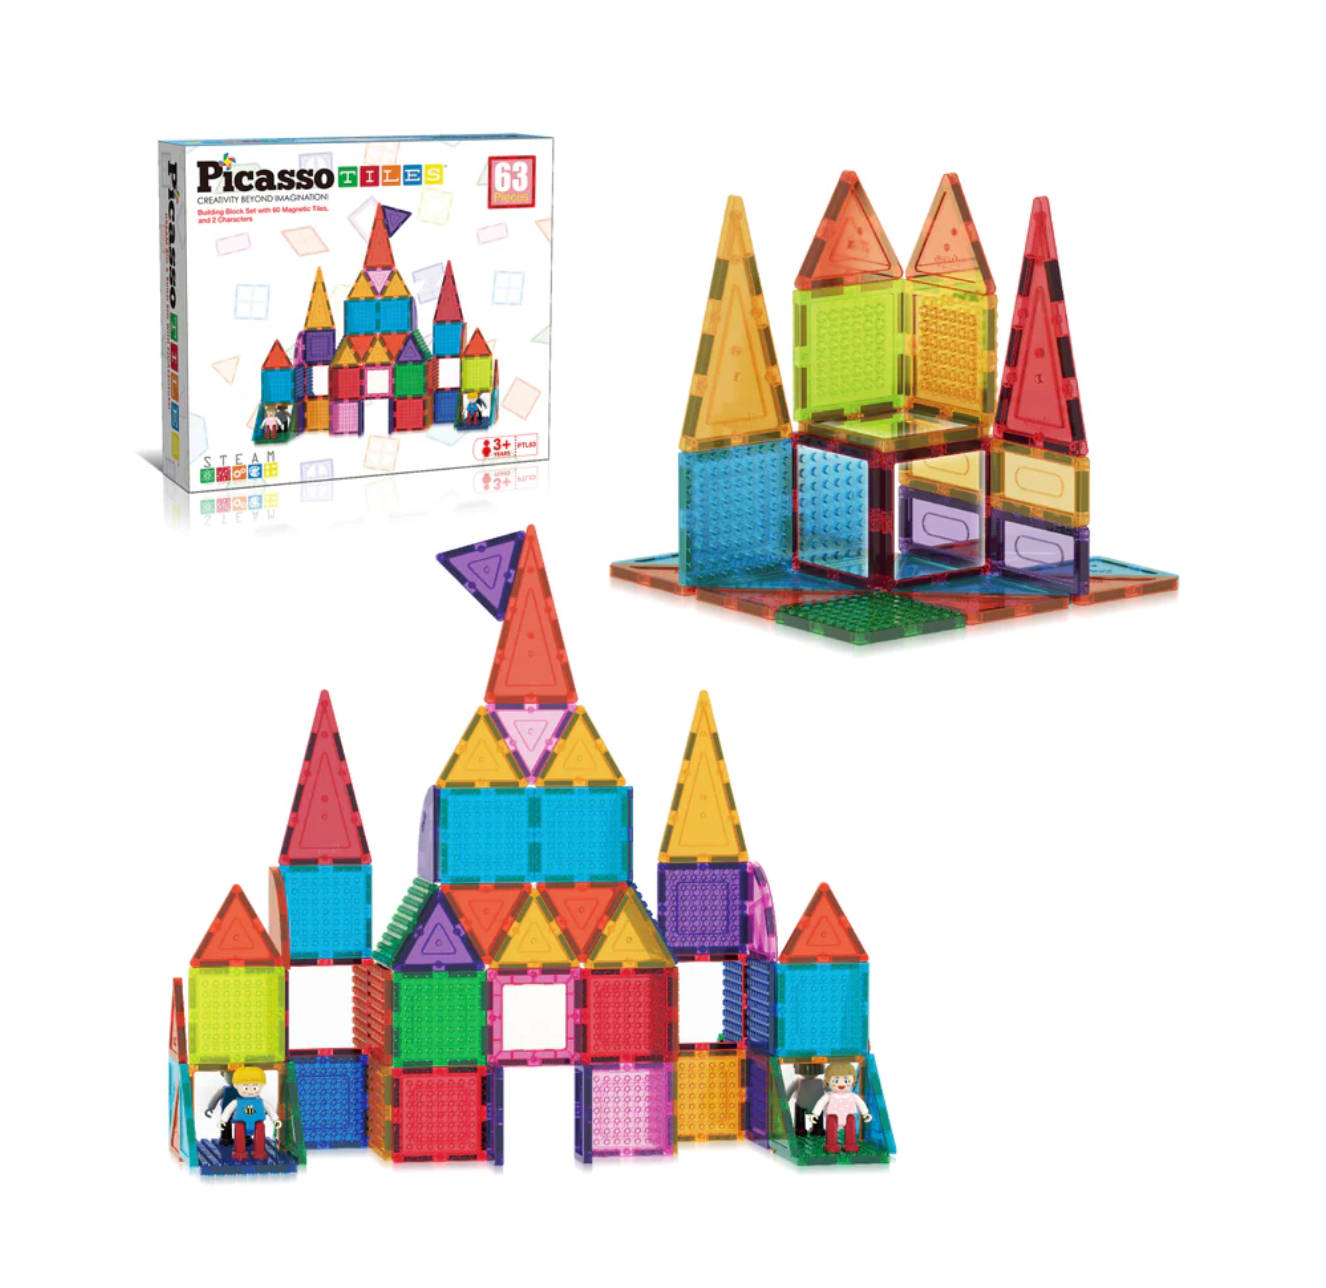 63 Piece Magnetic Building Tiles Toy Set – Baby Braithwaite